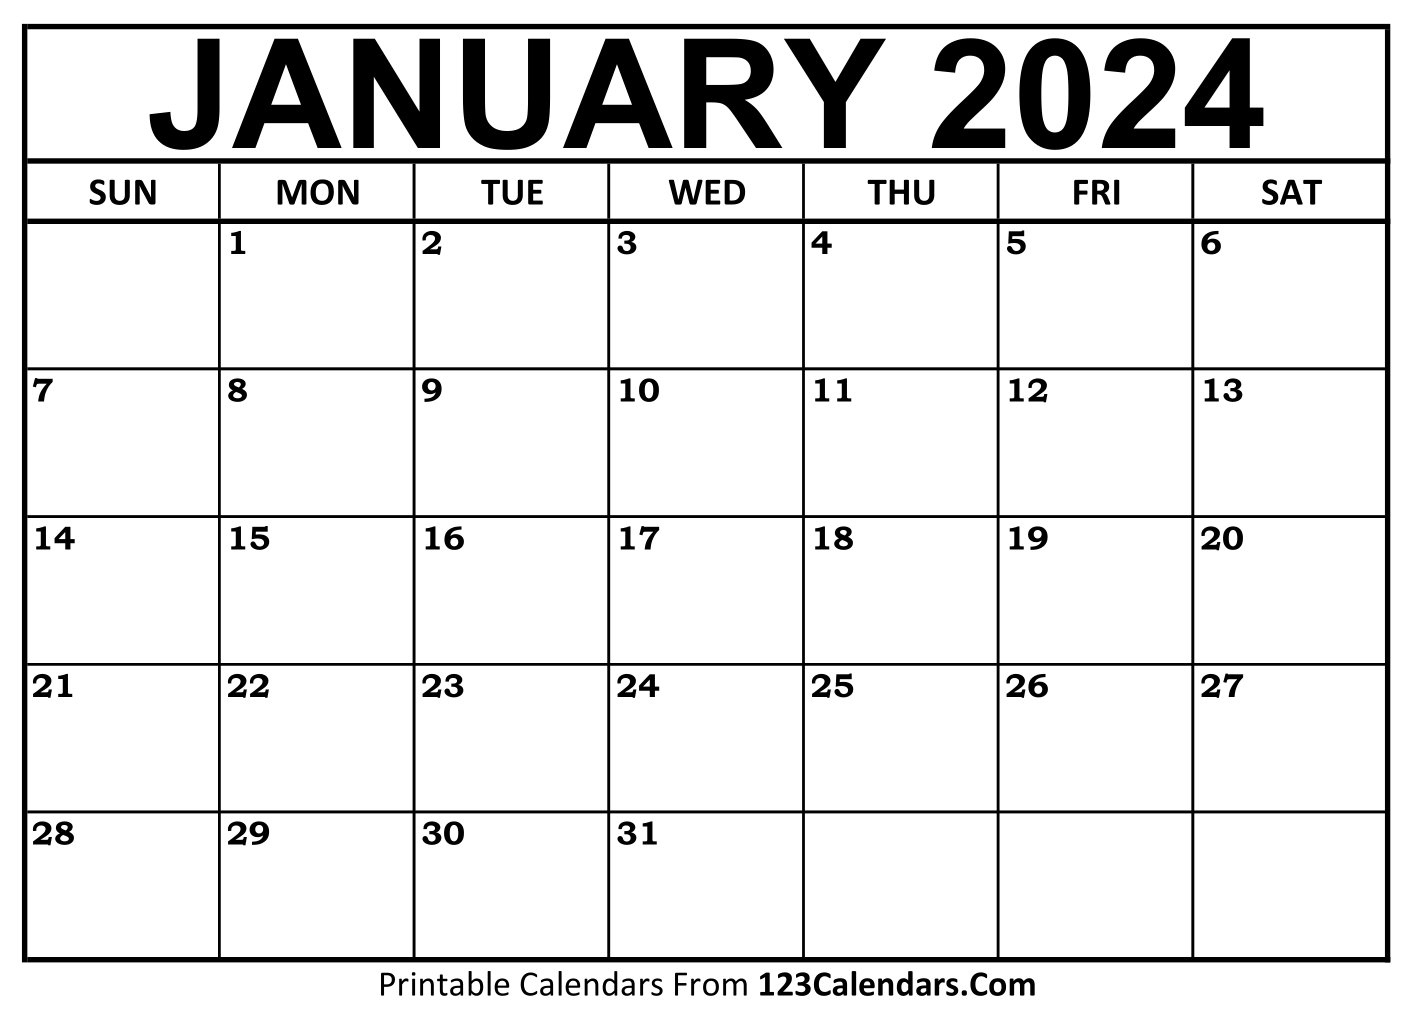 Printable January 2024 Calendar Templates - 123Calendars | Printable Calendar 2024 Free Blank